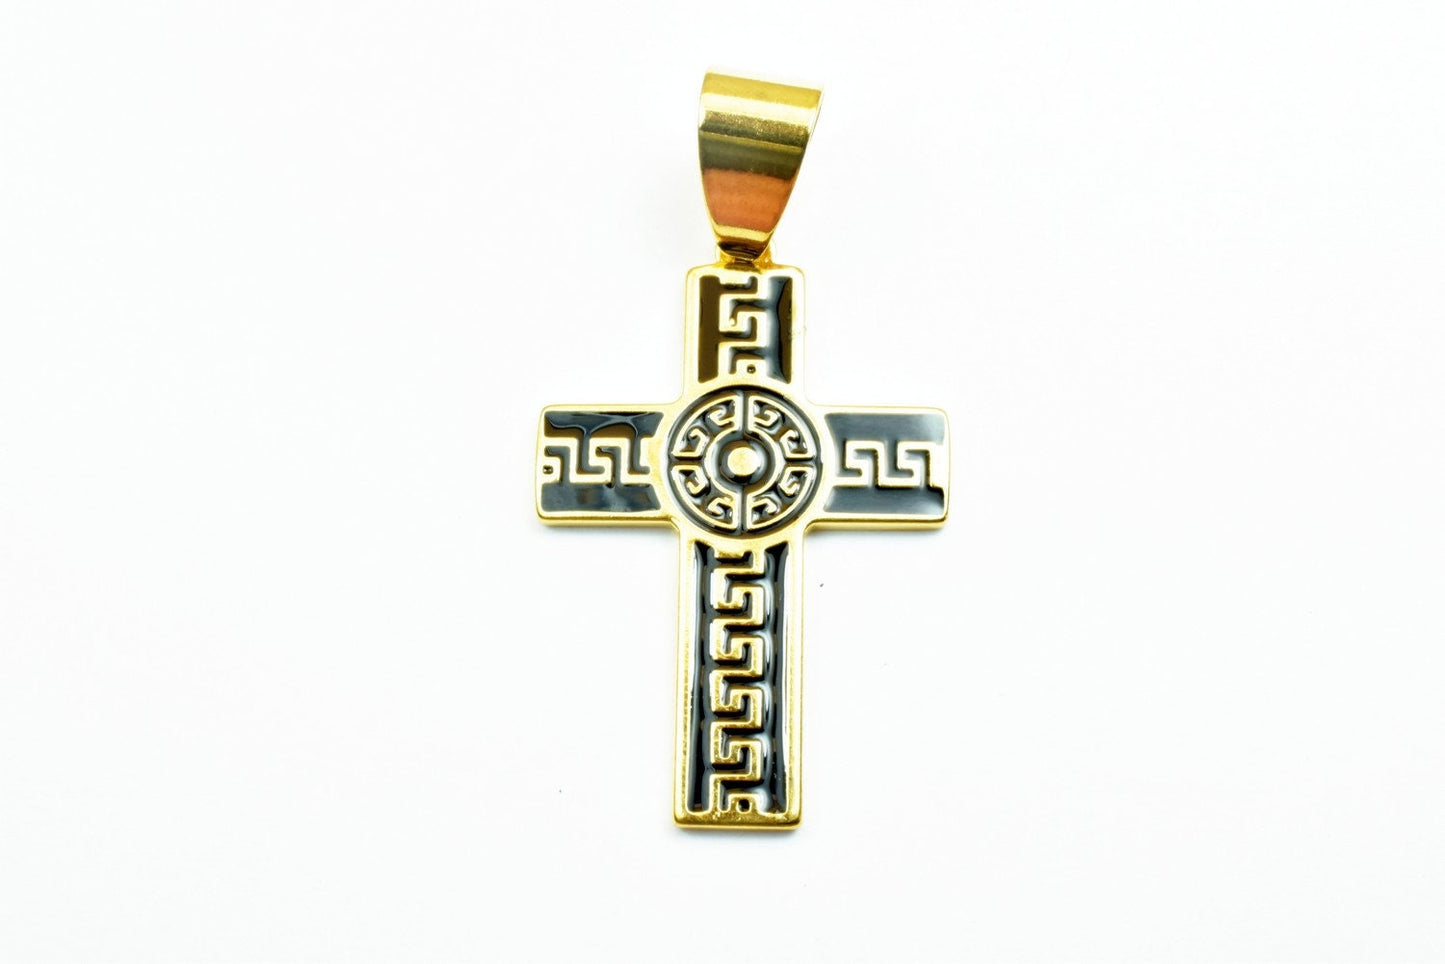 18K Gold Filled Black Enamel Cross Pendant Diamond Cut Size 38x25mm Chirstian Religious Cross Charm For Jewelry Making